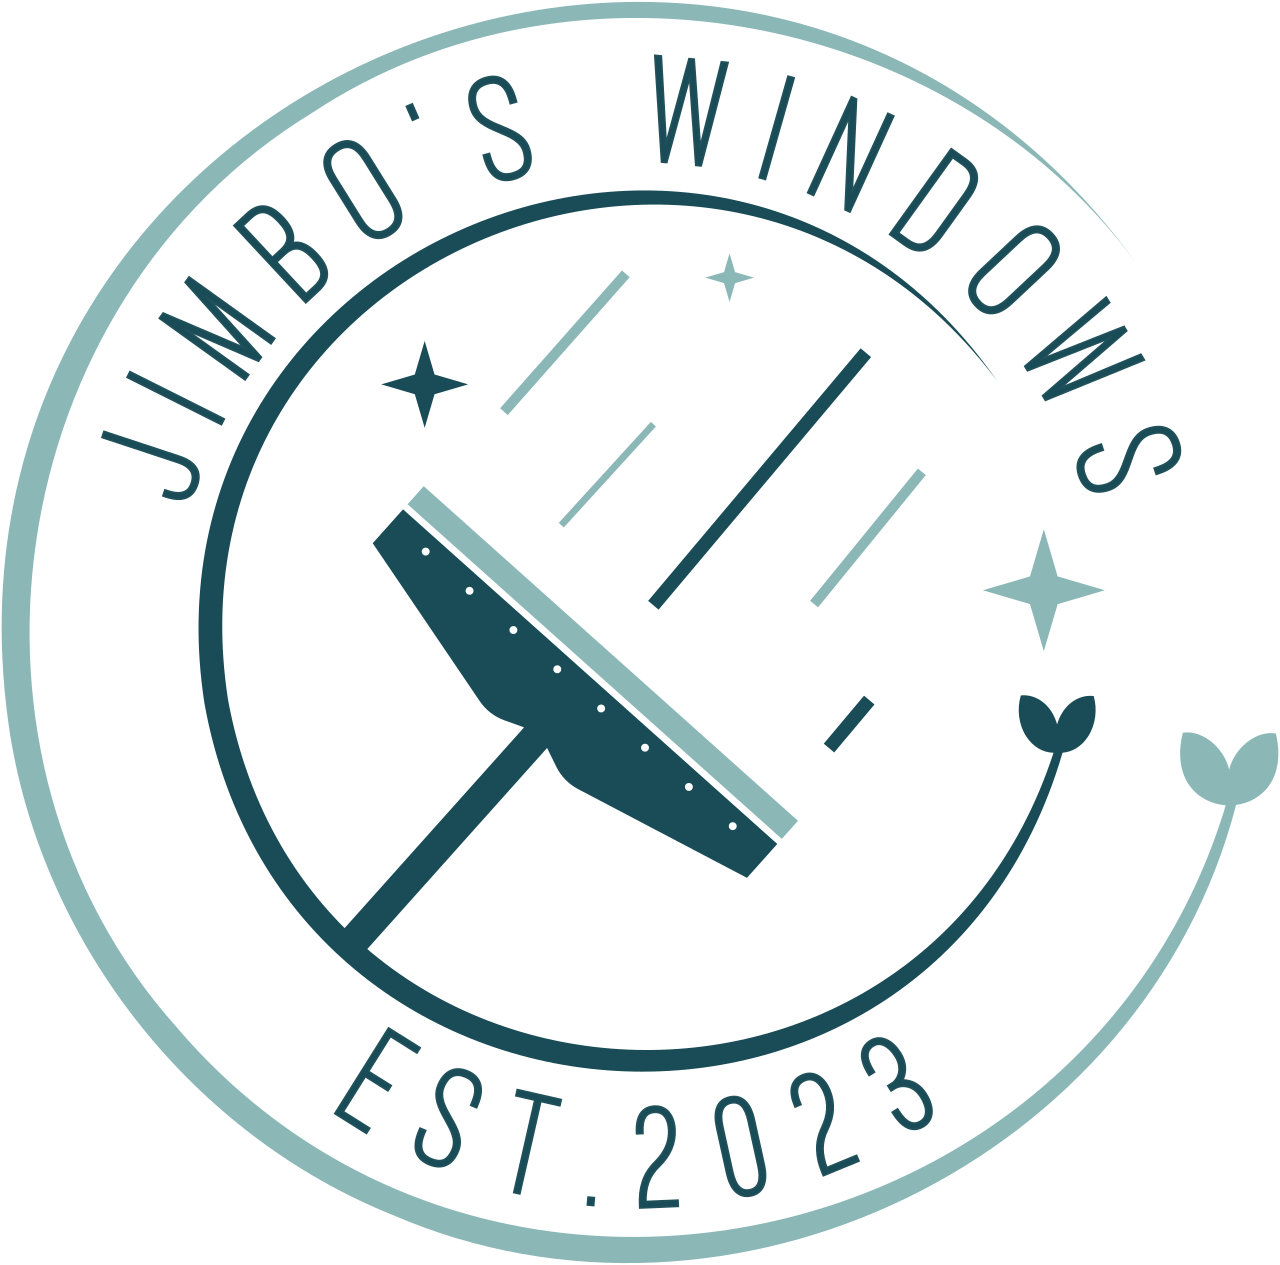 Jimbo's Windows's logo